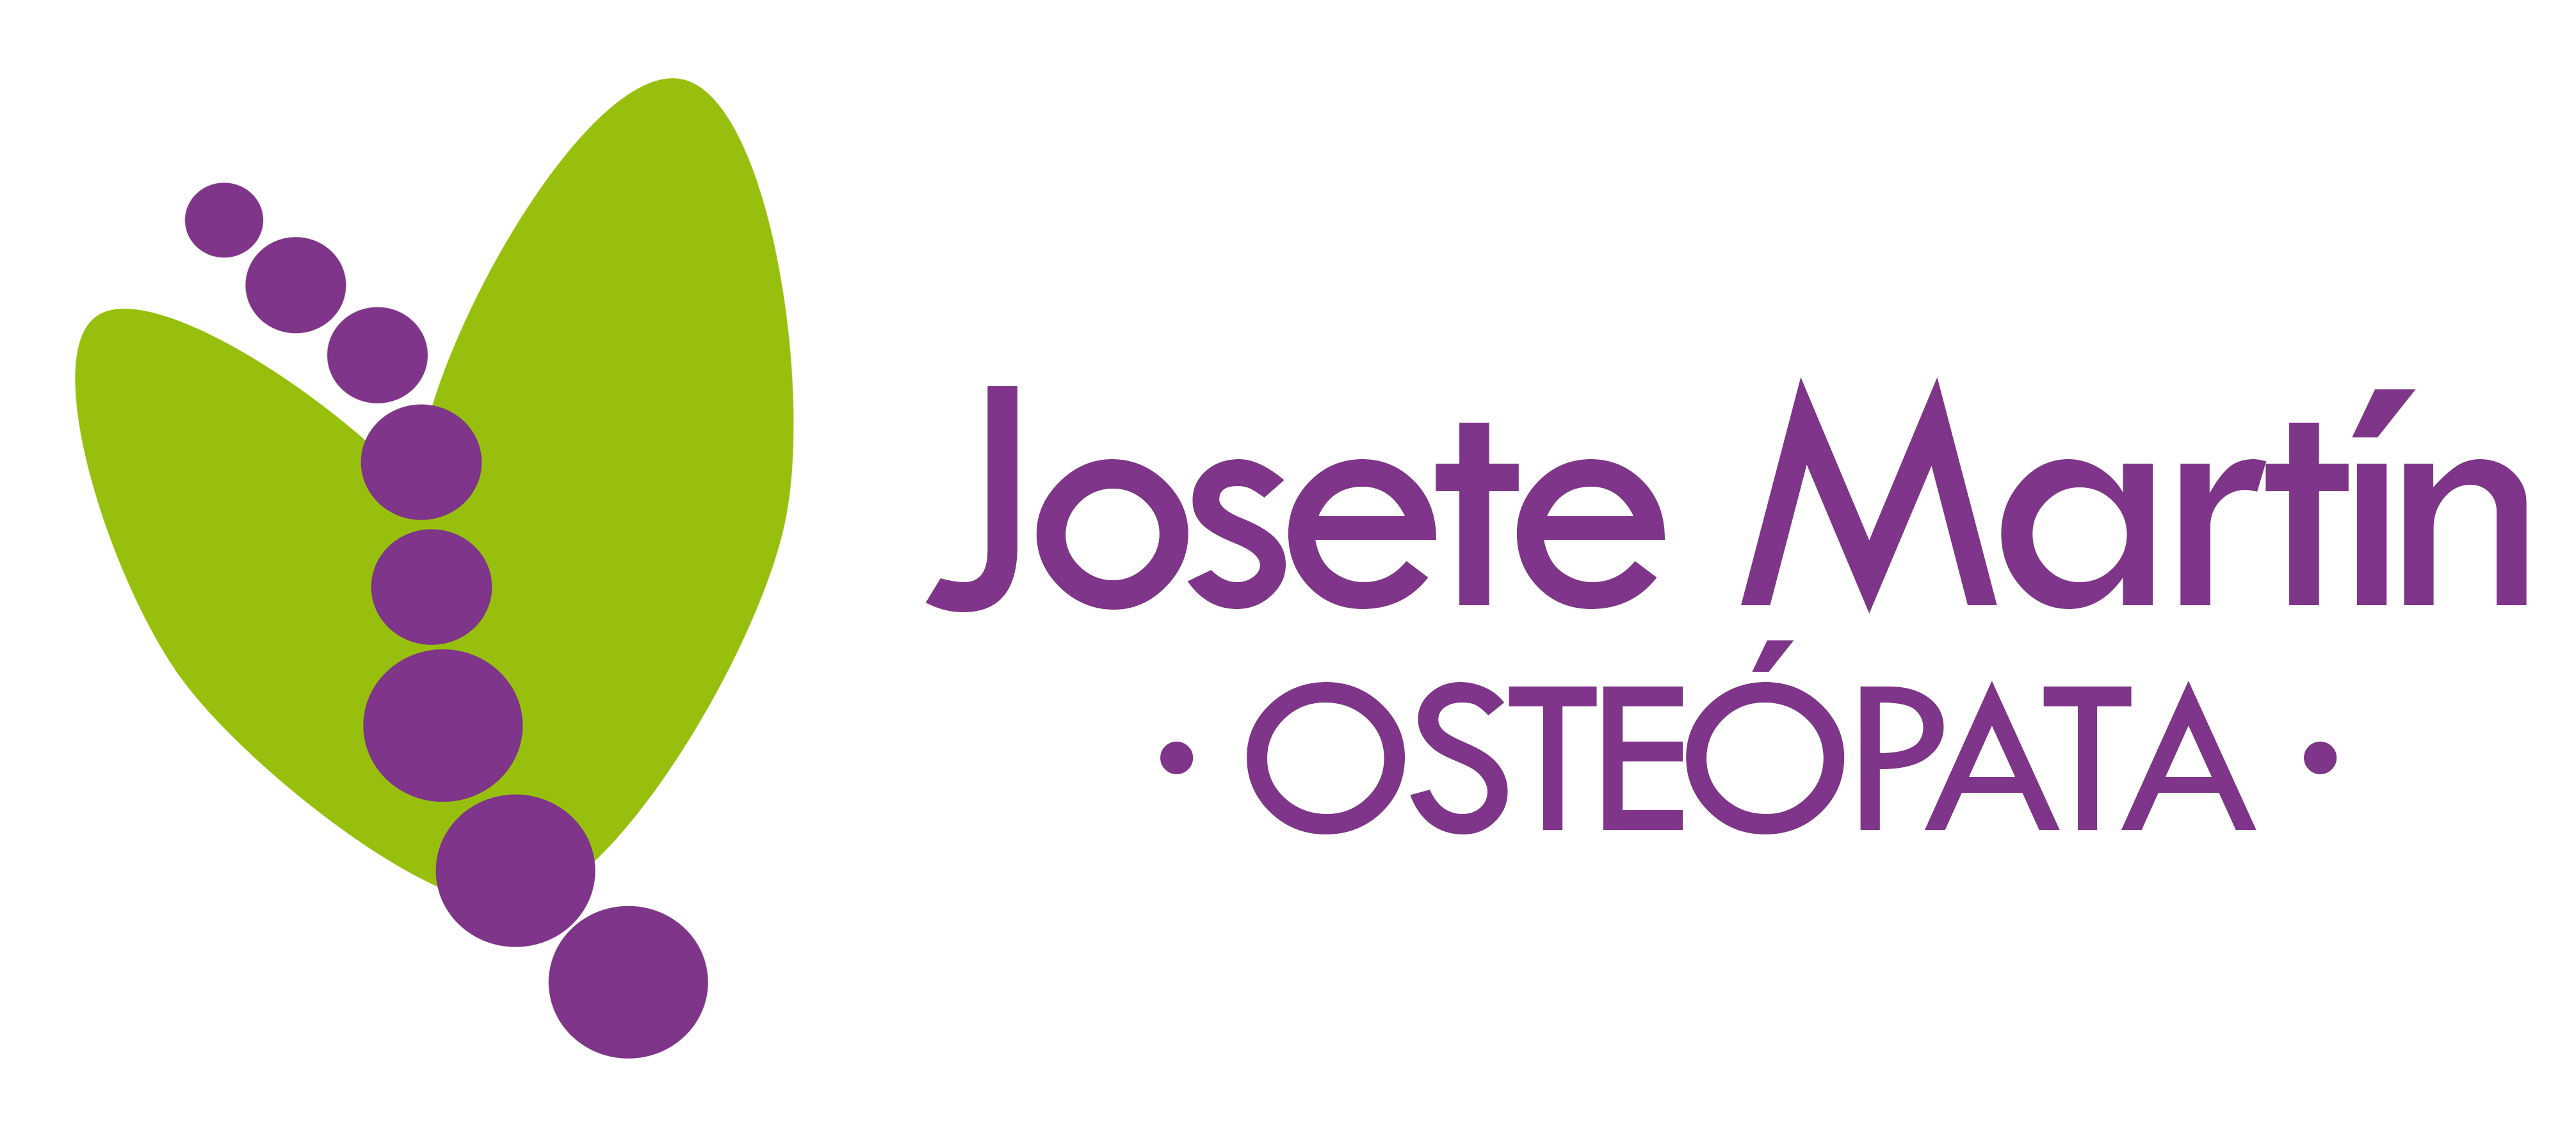 José Osteópata